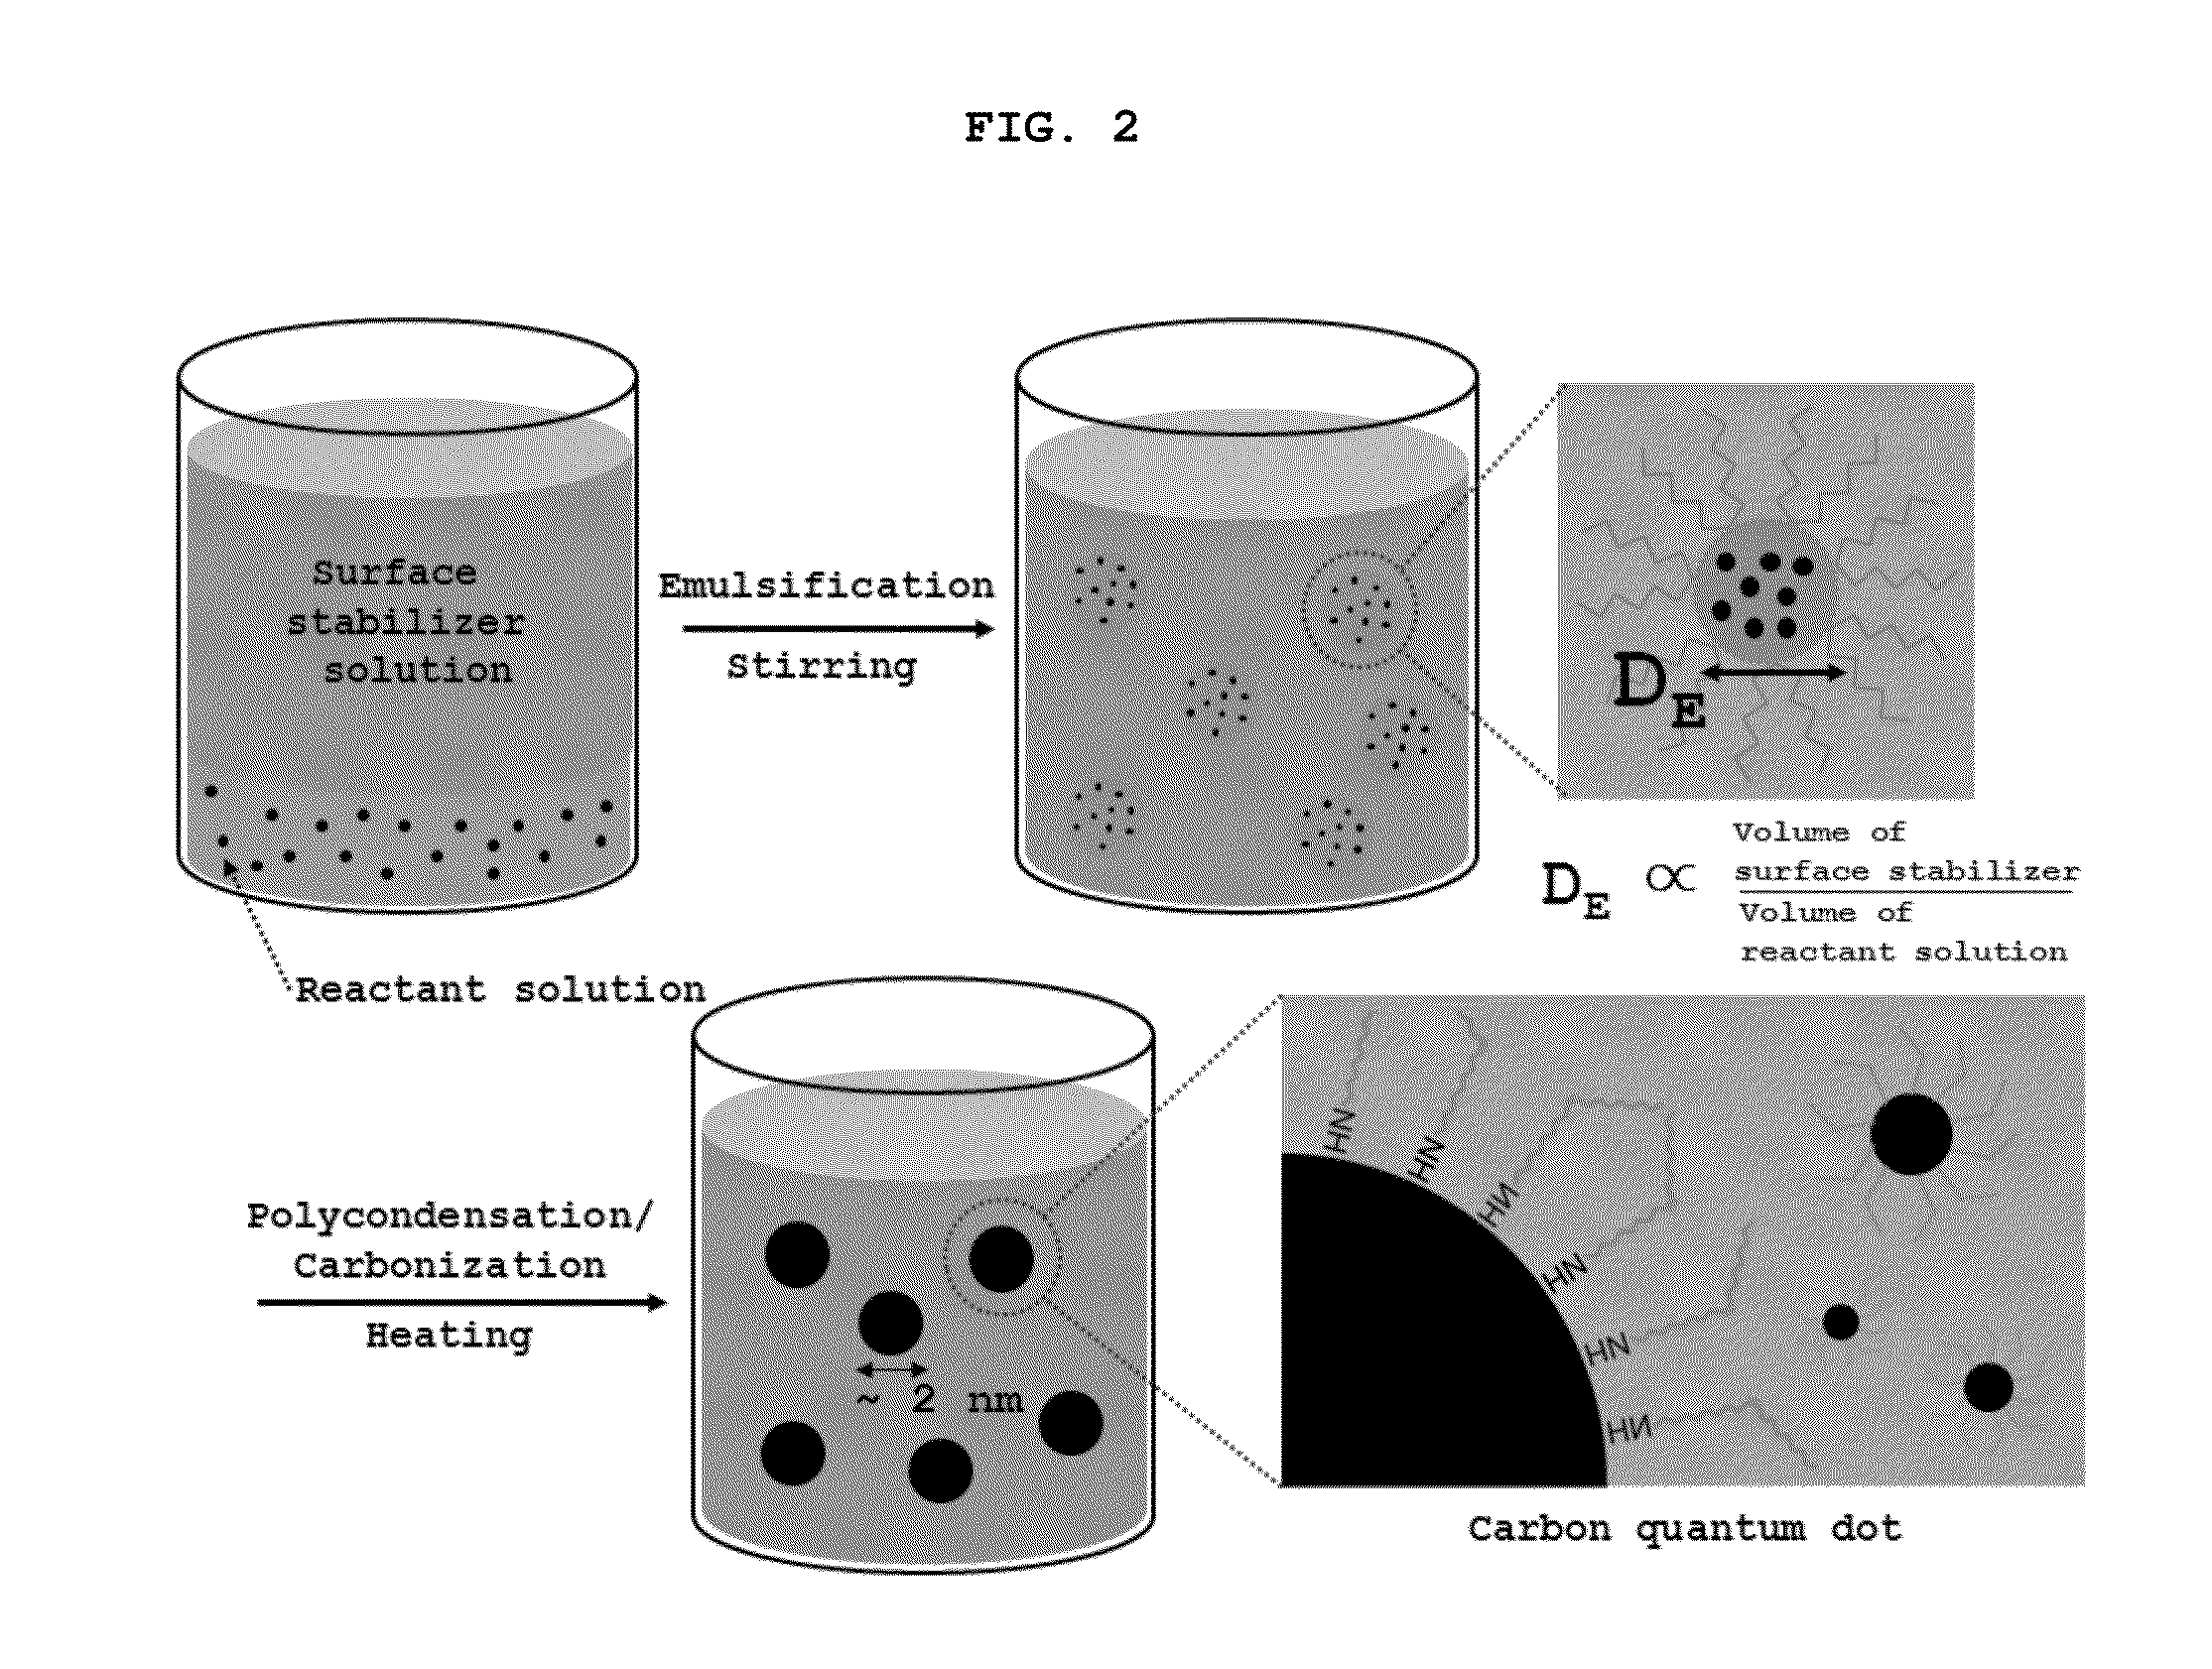 Process for preparing carbon quantum dots using emulsion